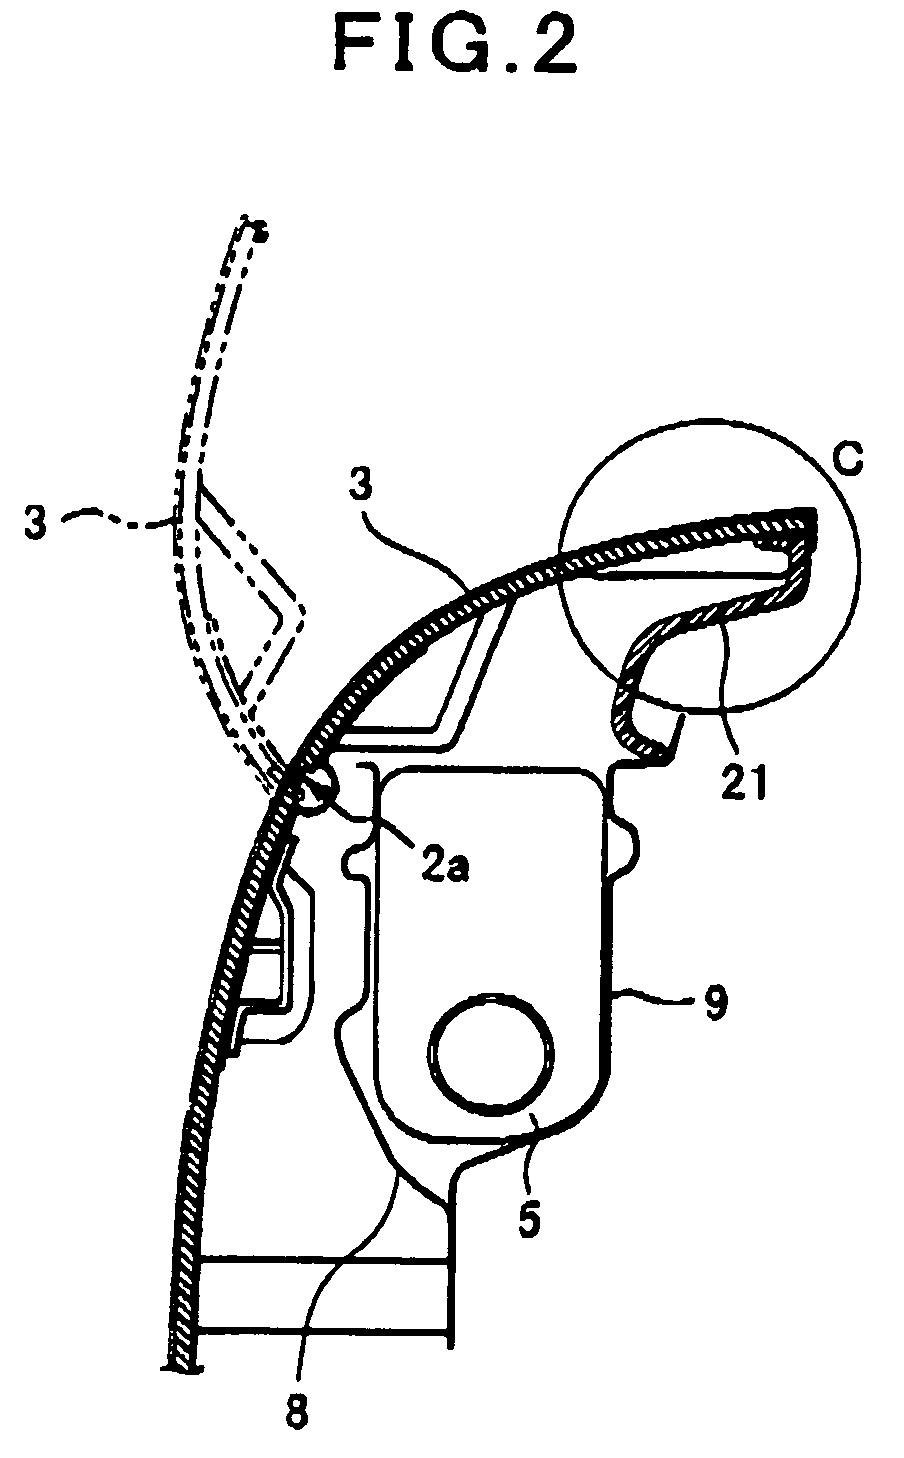 Vehicle interior parts